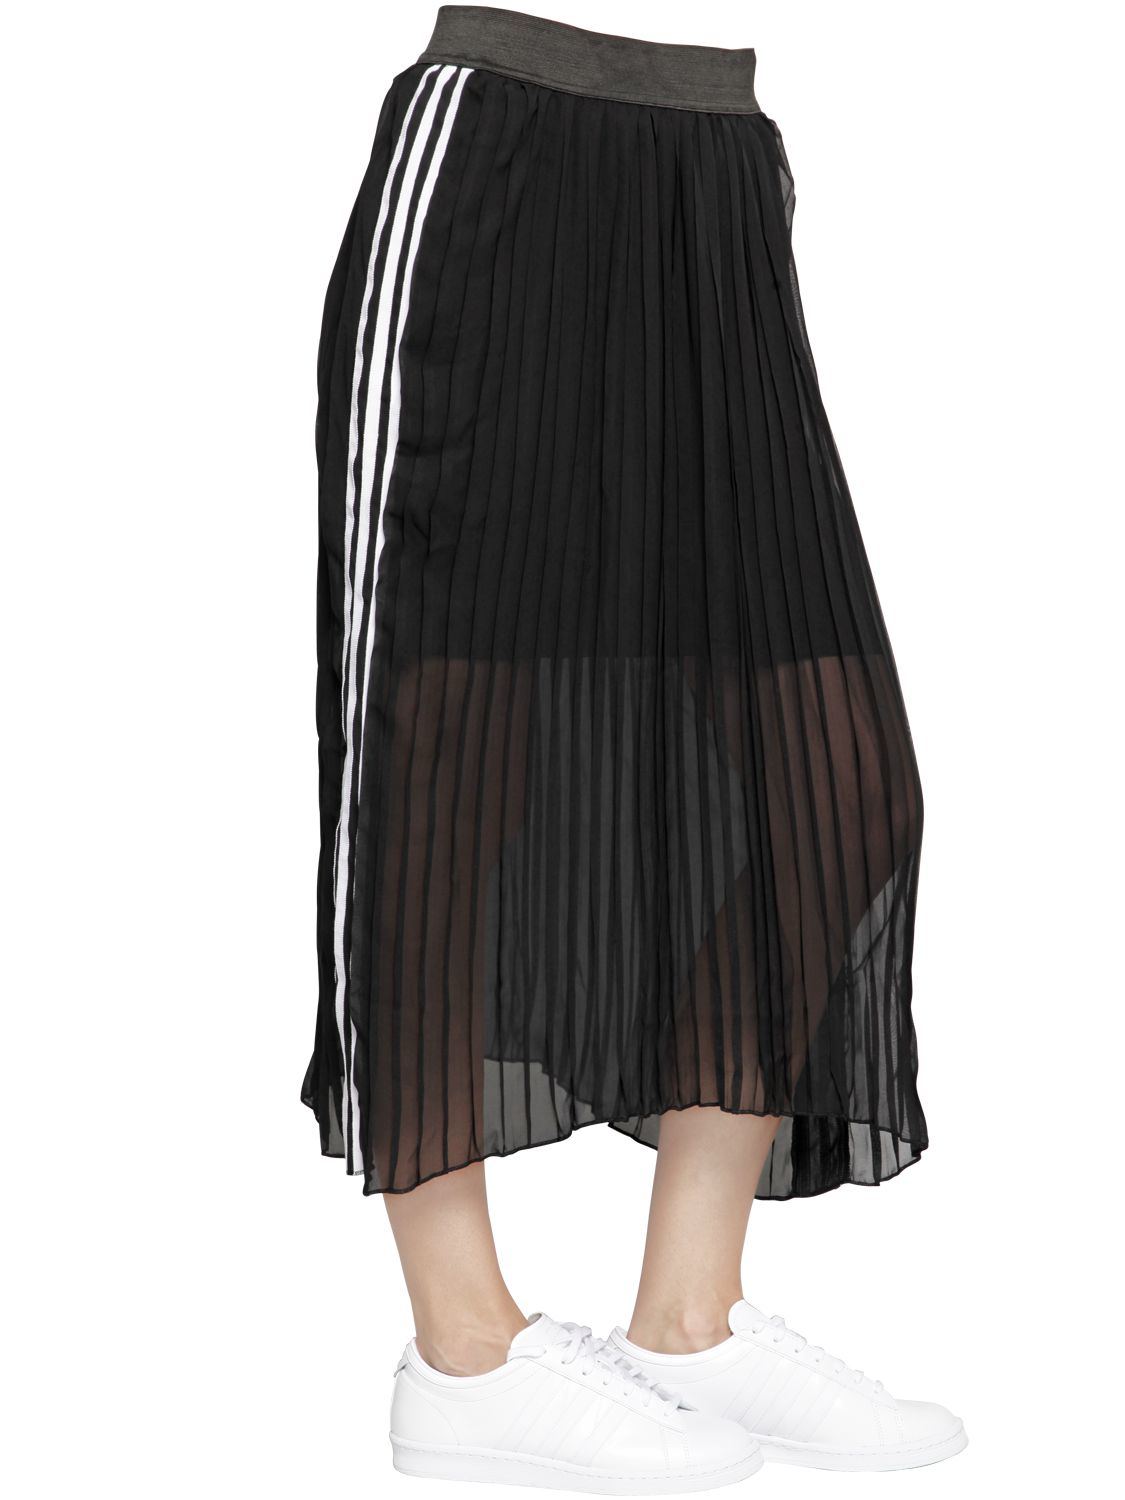 cdnc.lystit.com/photos/f41d-2015/12/04/adidas-originals-black-tennis-plisse-techno-chiffon-skirt-product-1-301431133-normal.jpeg